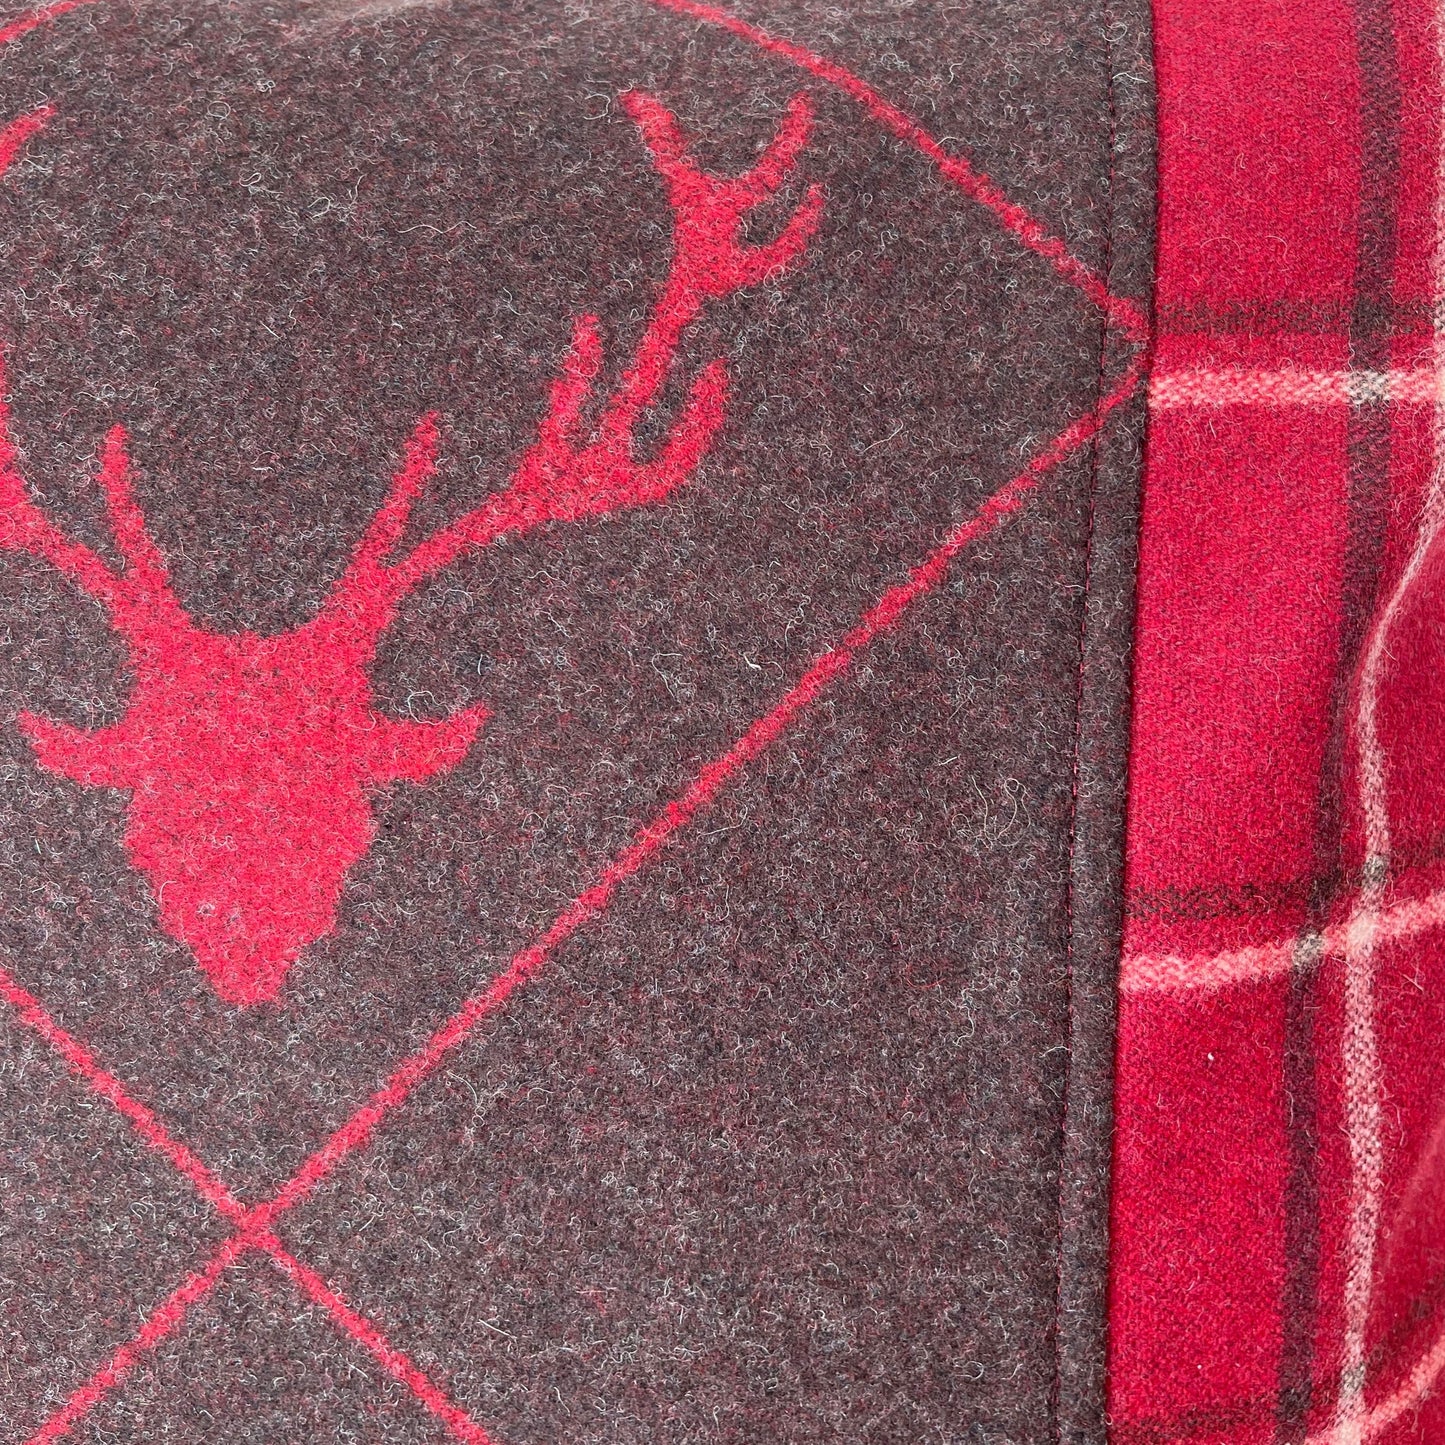 Deer design cushion cover, deer centered, red/brown